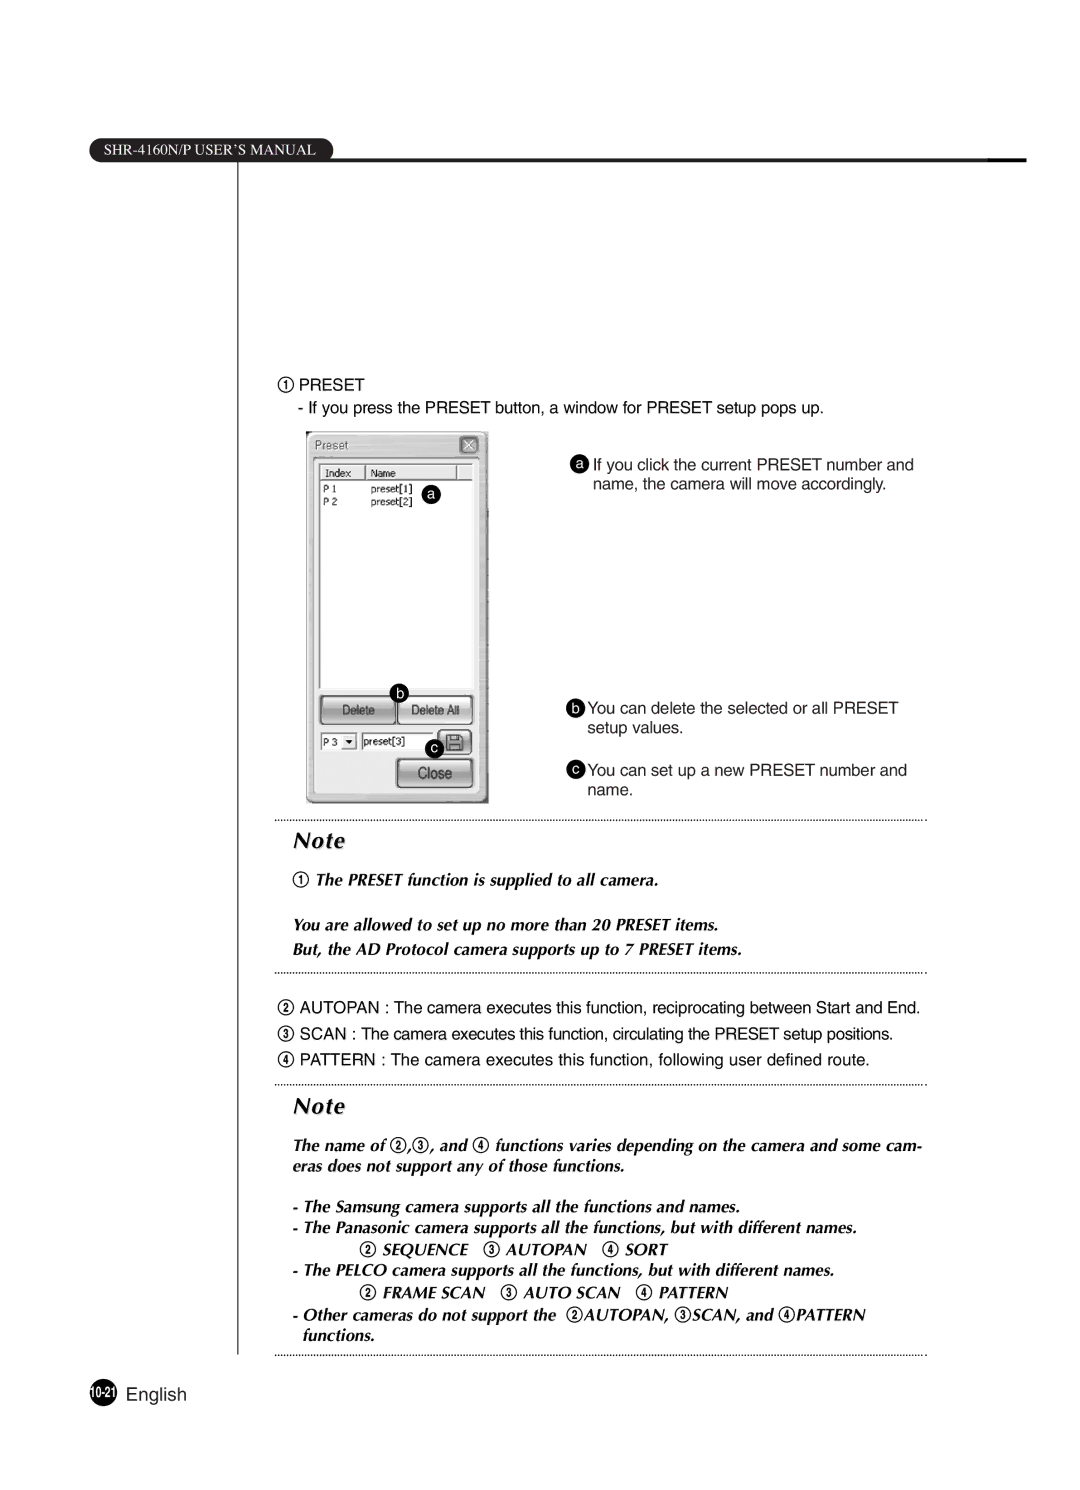 Samsung SHR-4160P manual 10-21English, Preset 